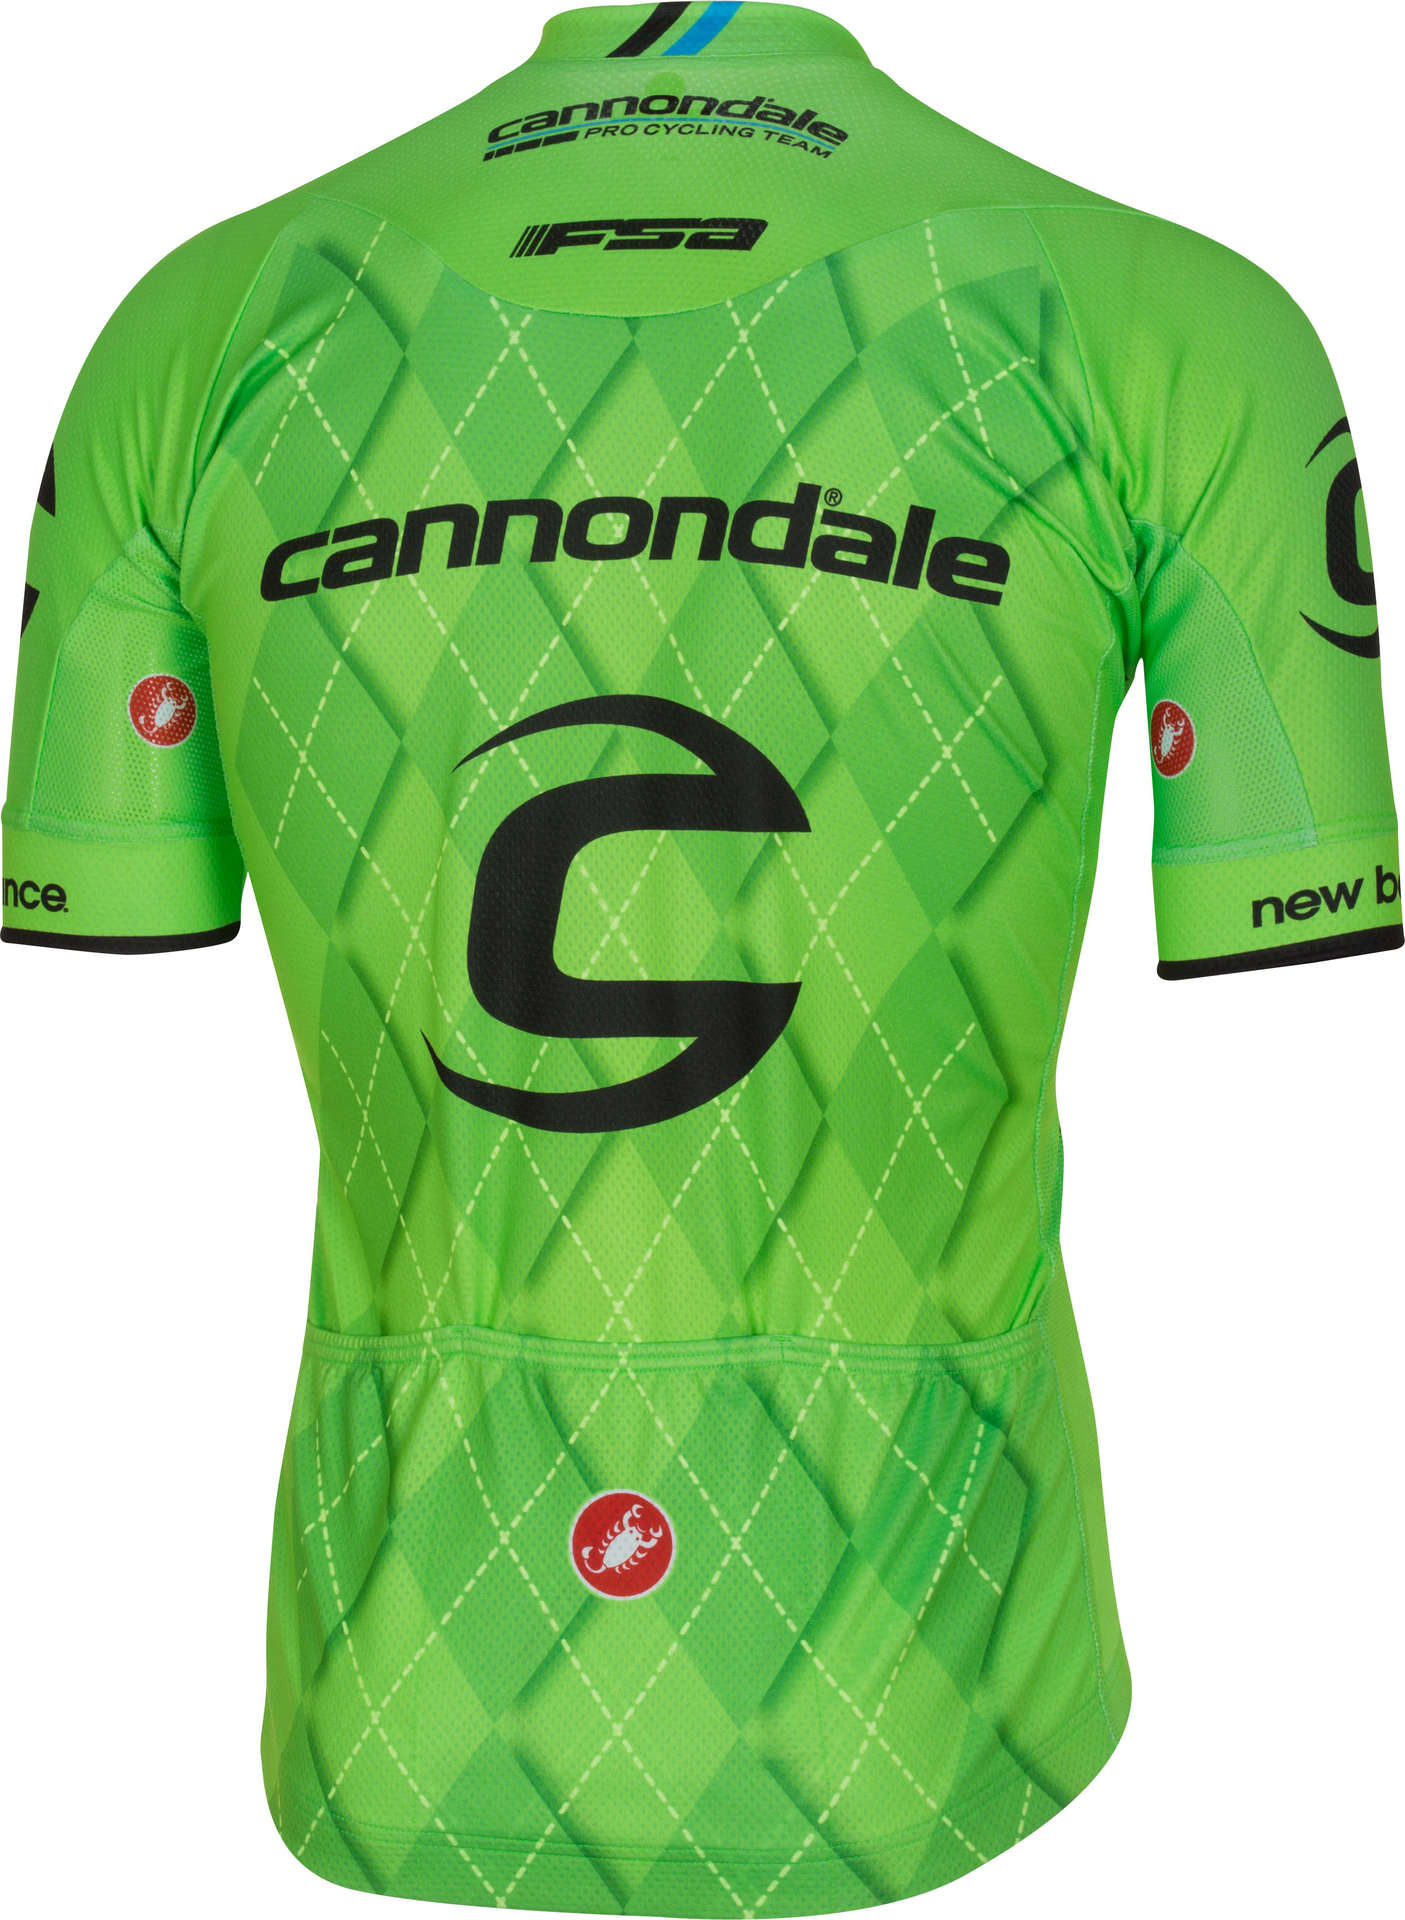 Castelli Cannondale Team 2.0 Fietsshirt Korte Mouwen Groen